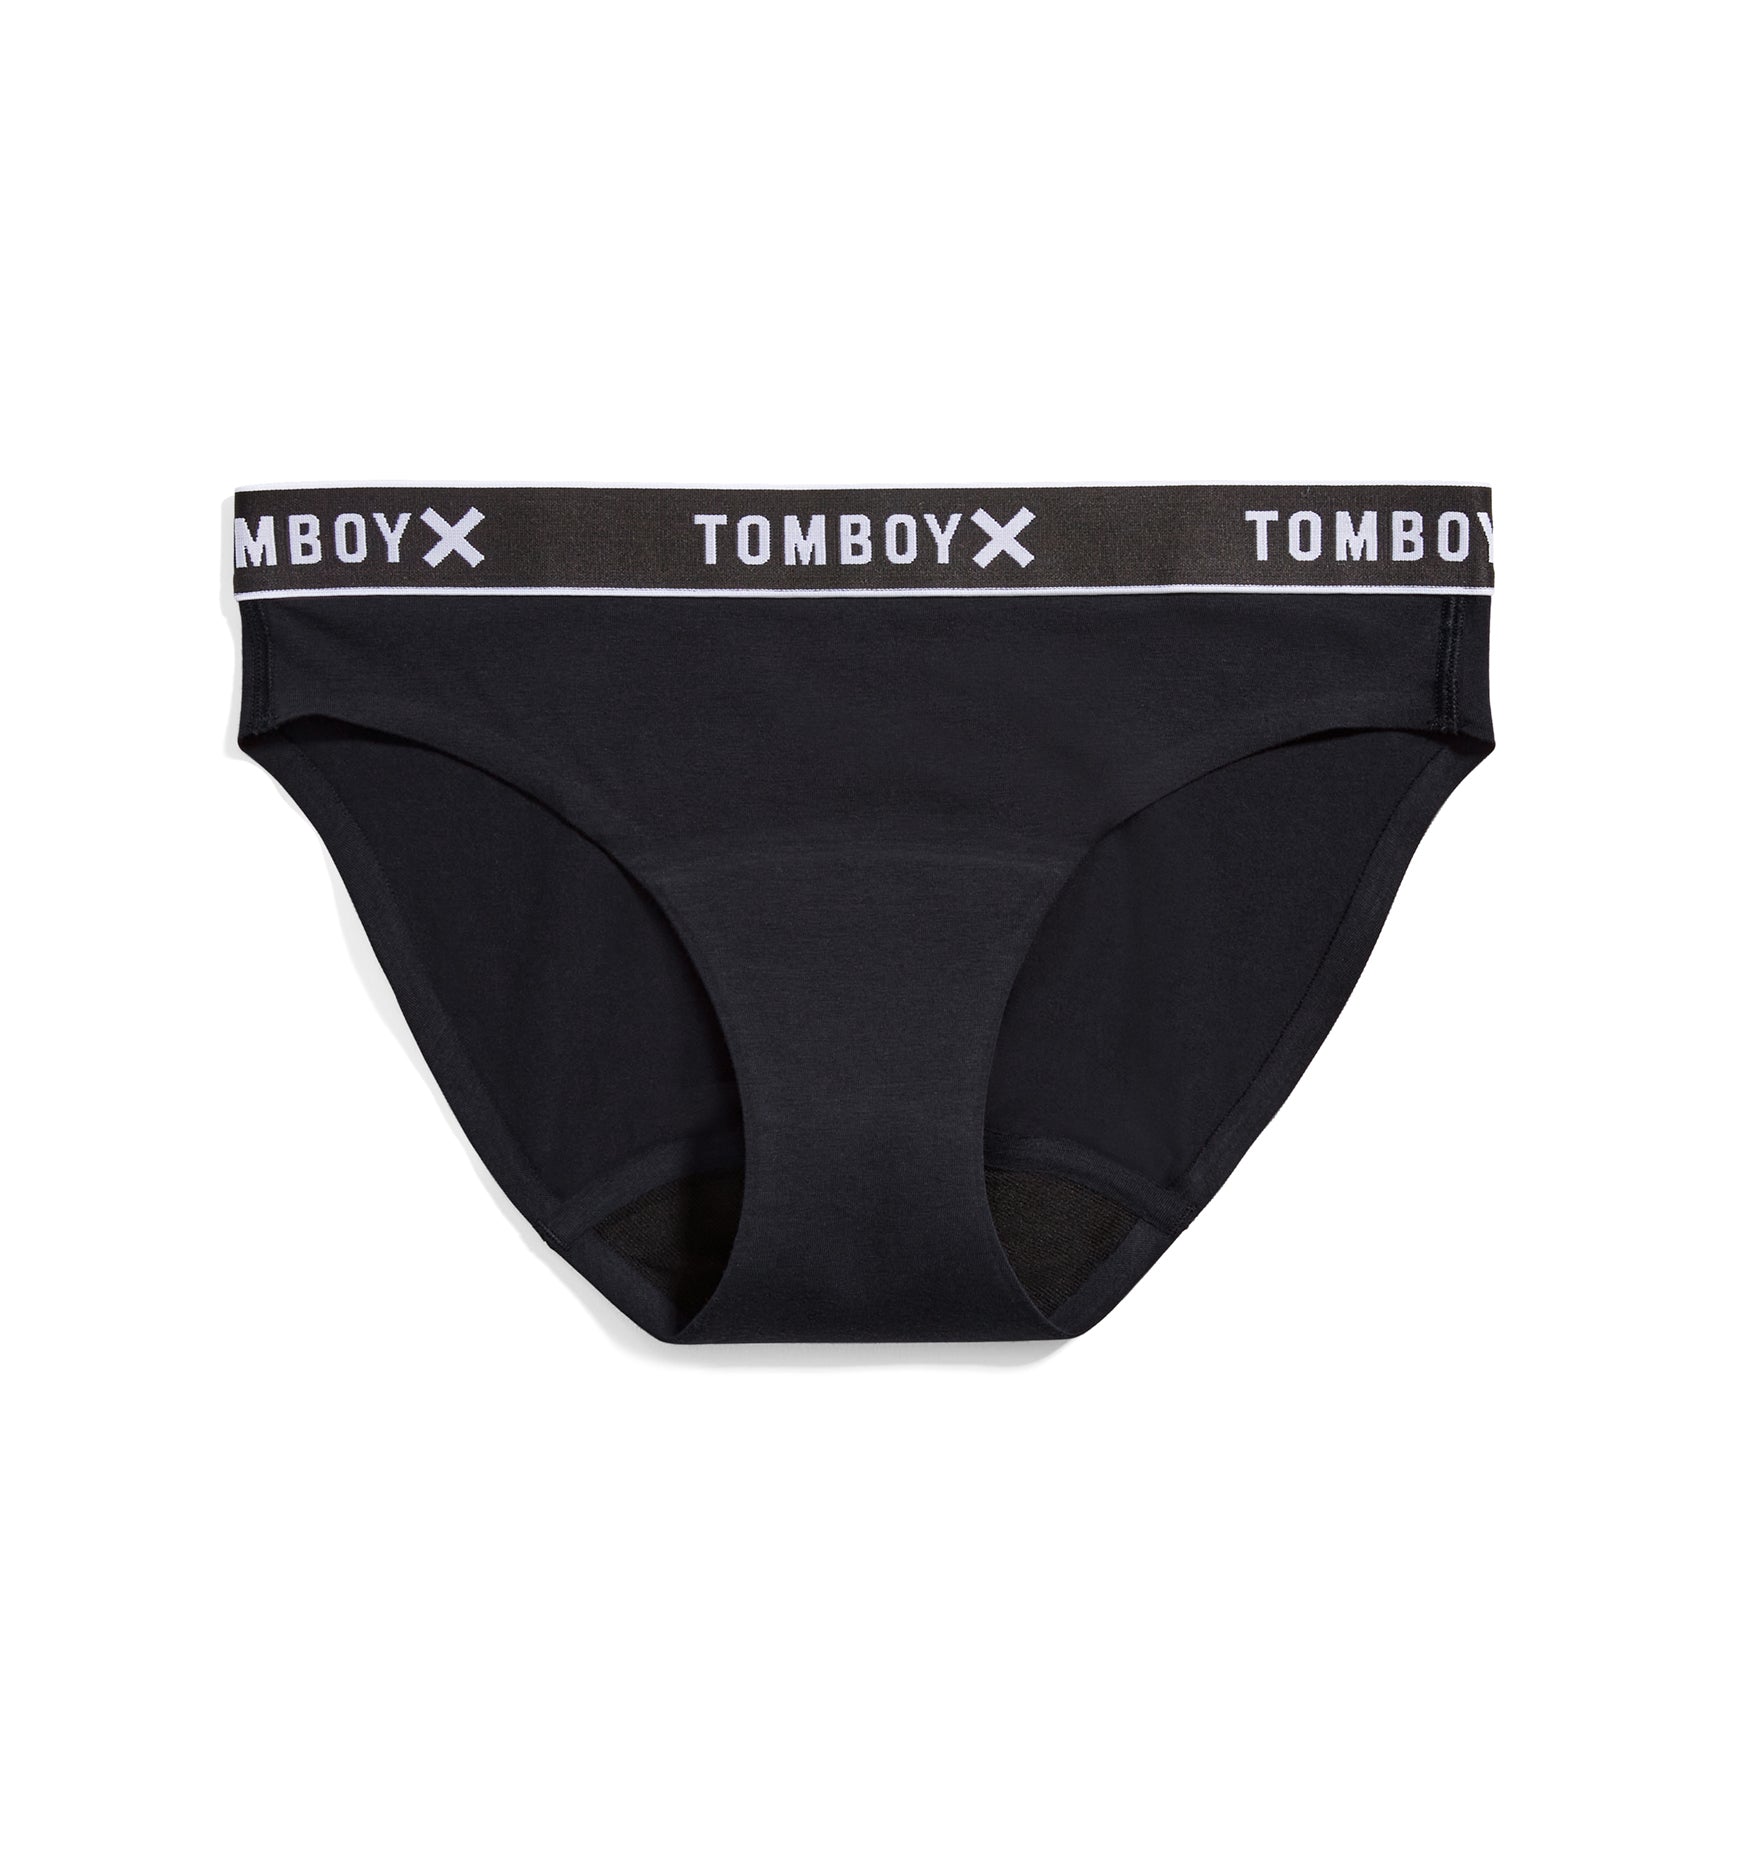 First Line Period Boy Shorts - Sugar Violet – TomboyX